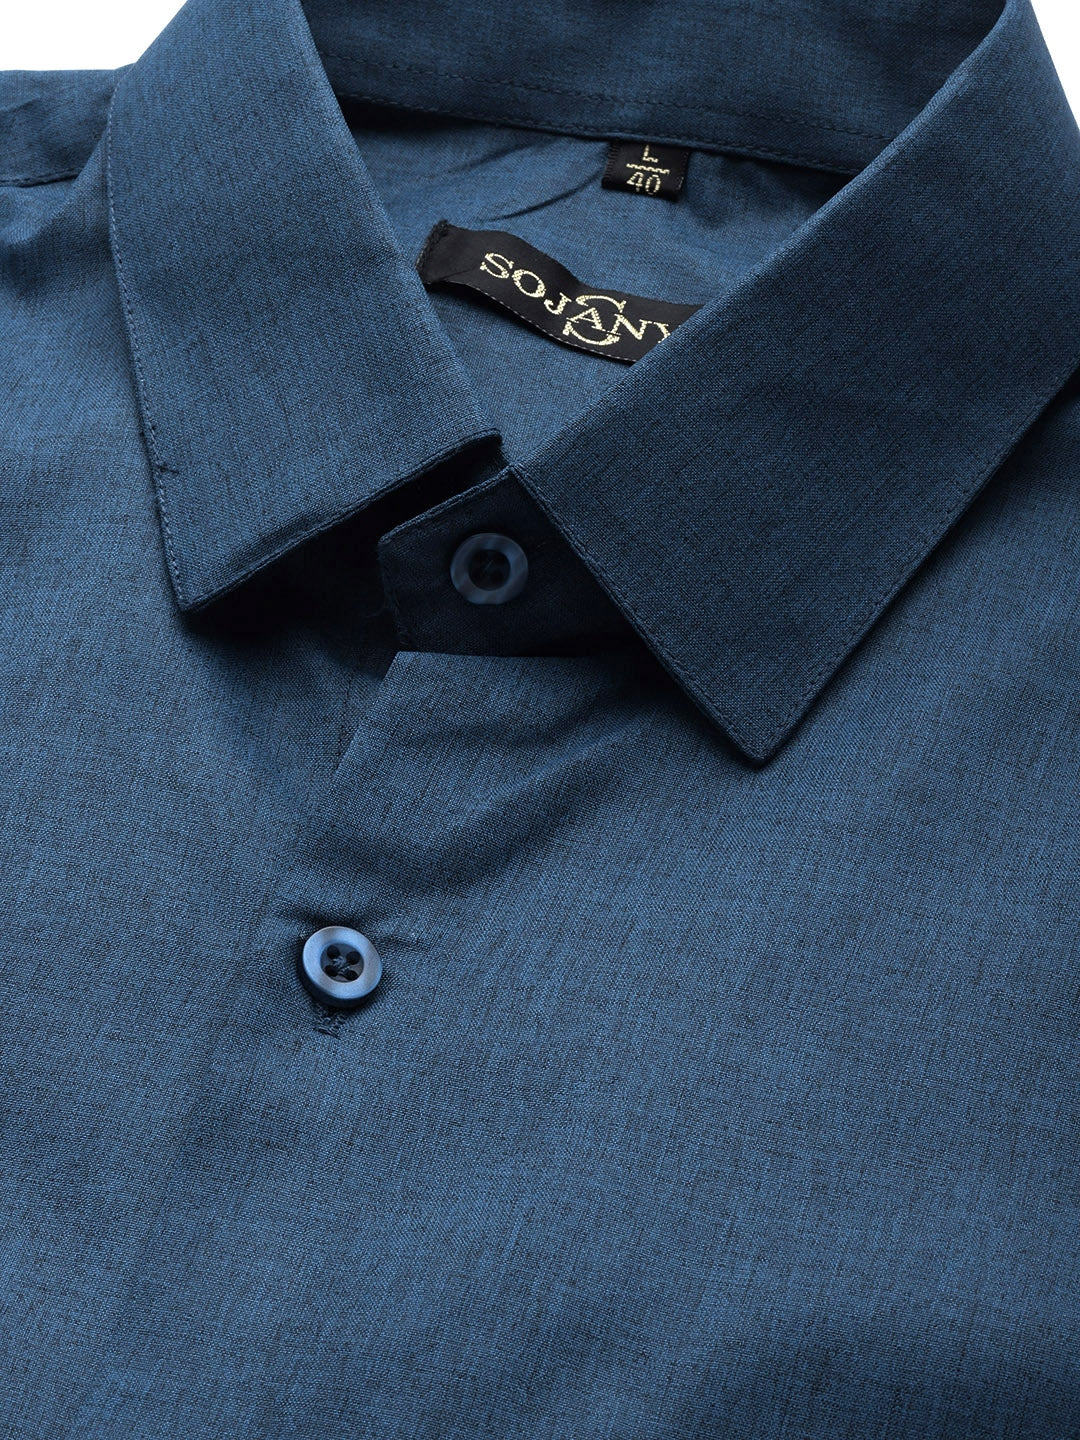 Men's Cotton Navy Blue Casual Shirt